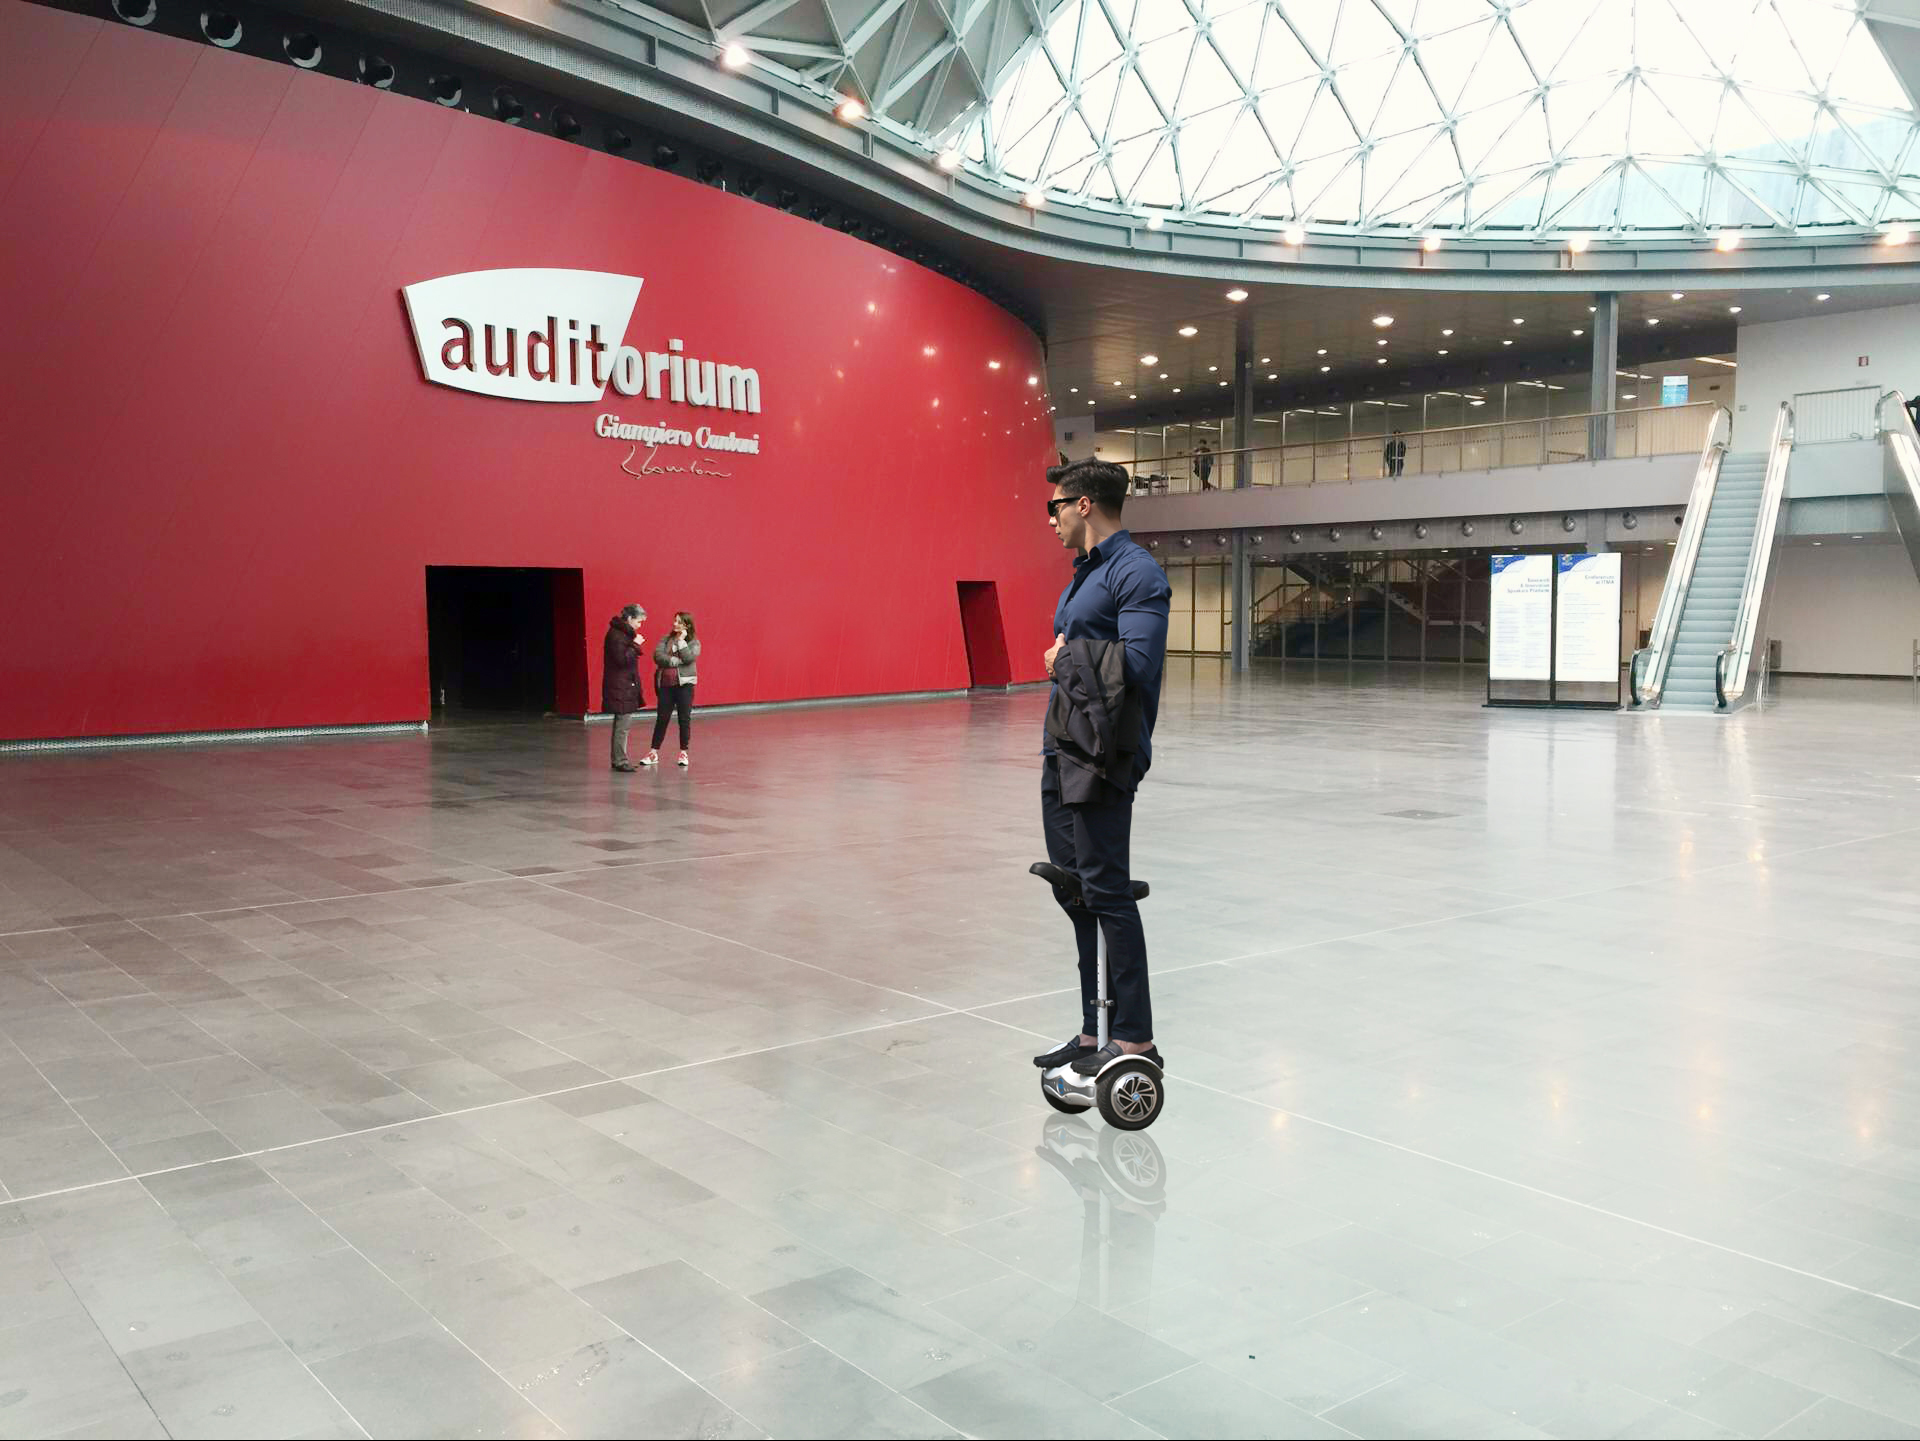 airwheel self-balancing scooter